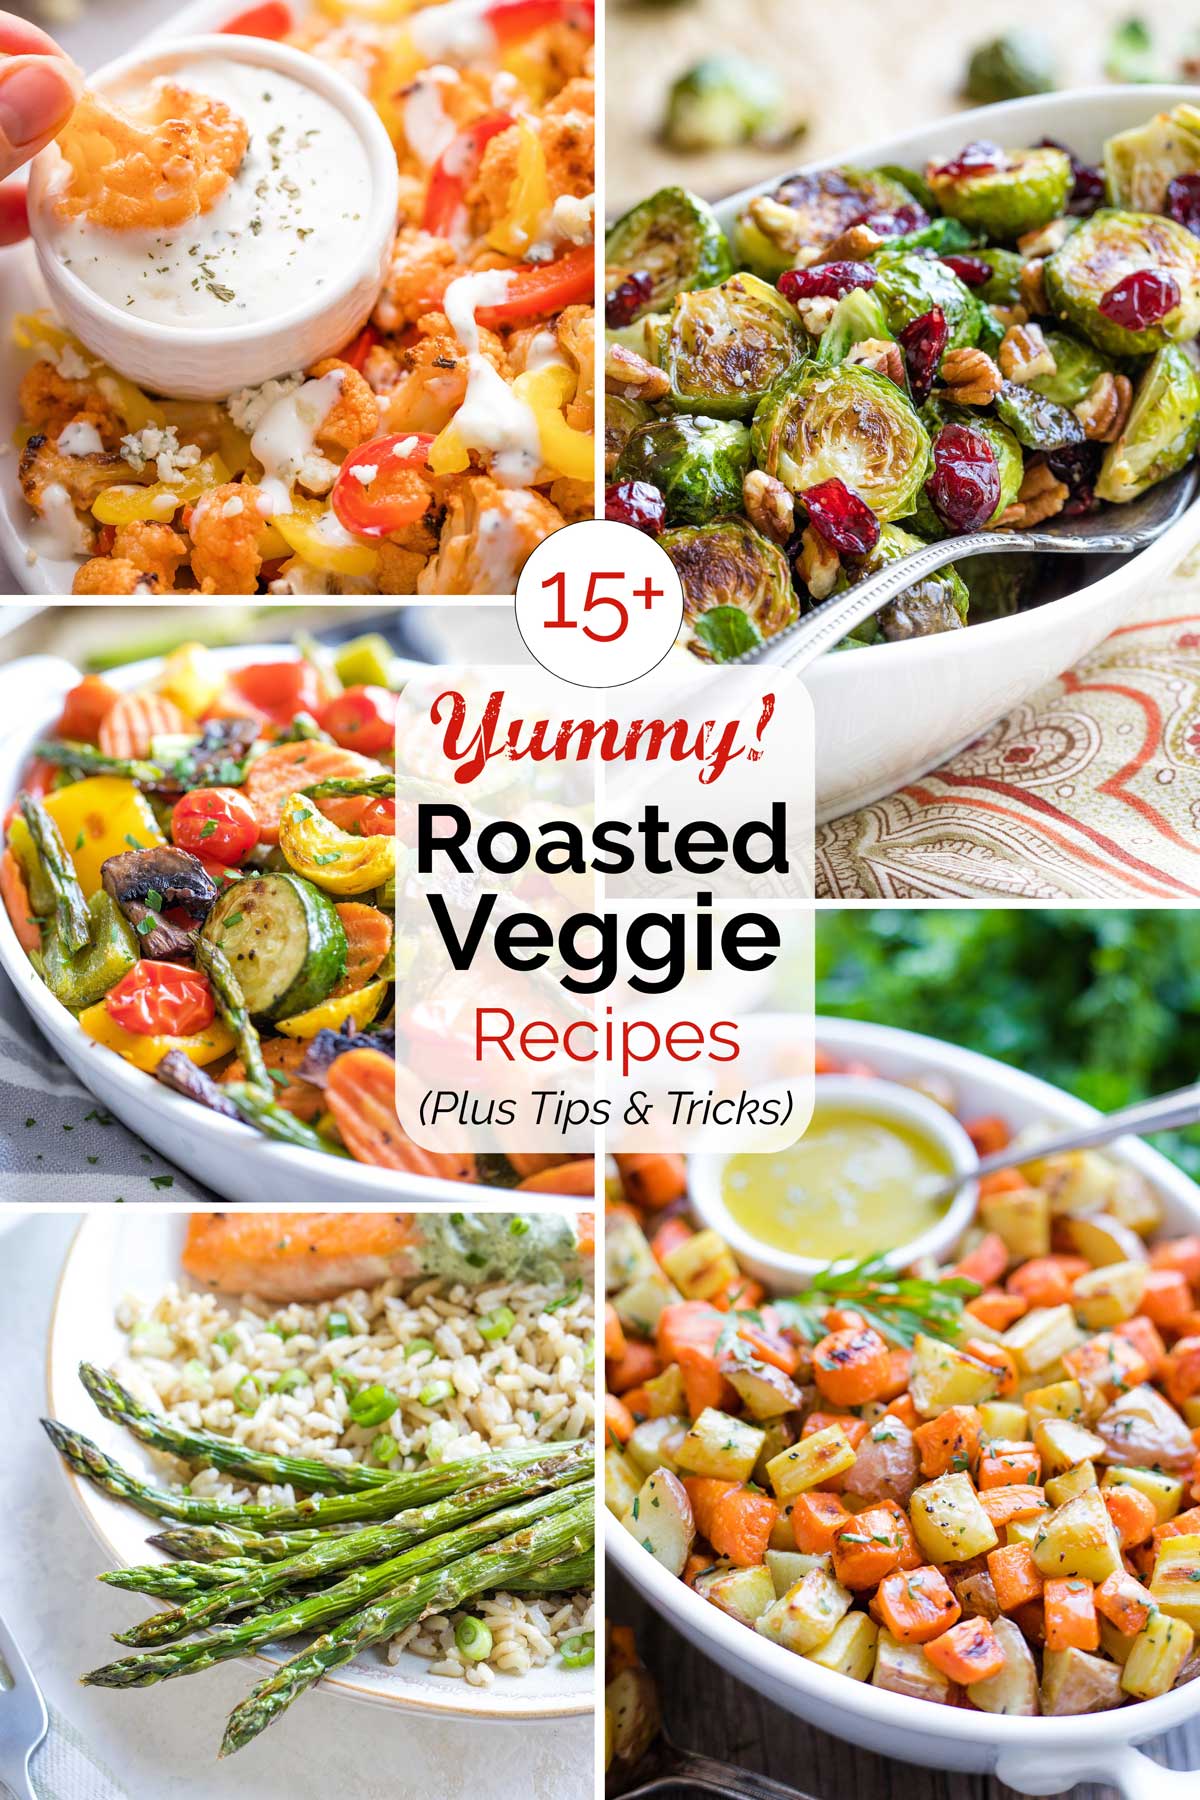 Collage of 5 recipe photos plus text overlay reading "15+ Yummy! Roasted Veggie Recipes (Plus Tips & Tricks).